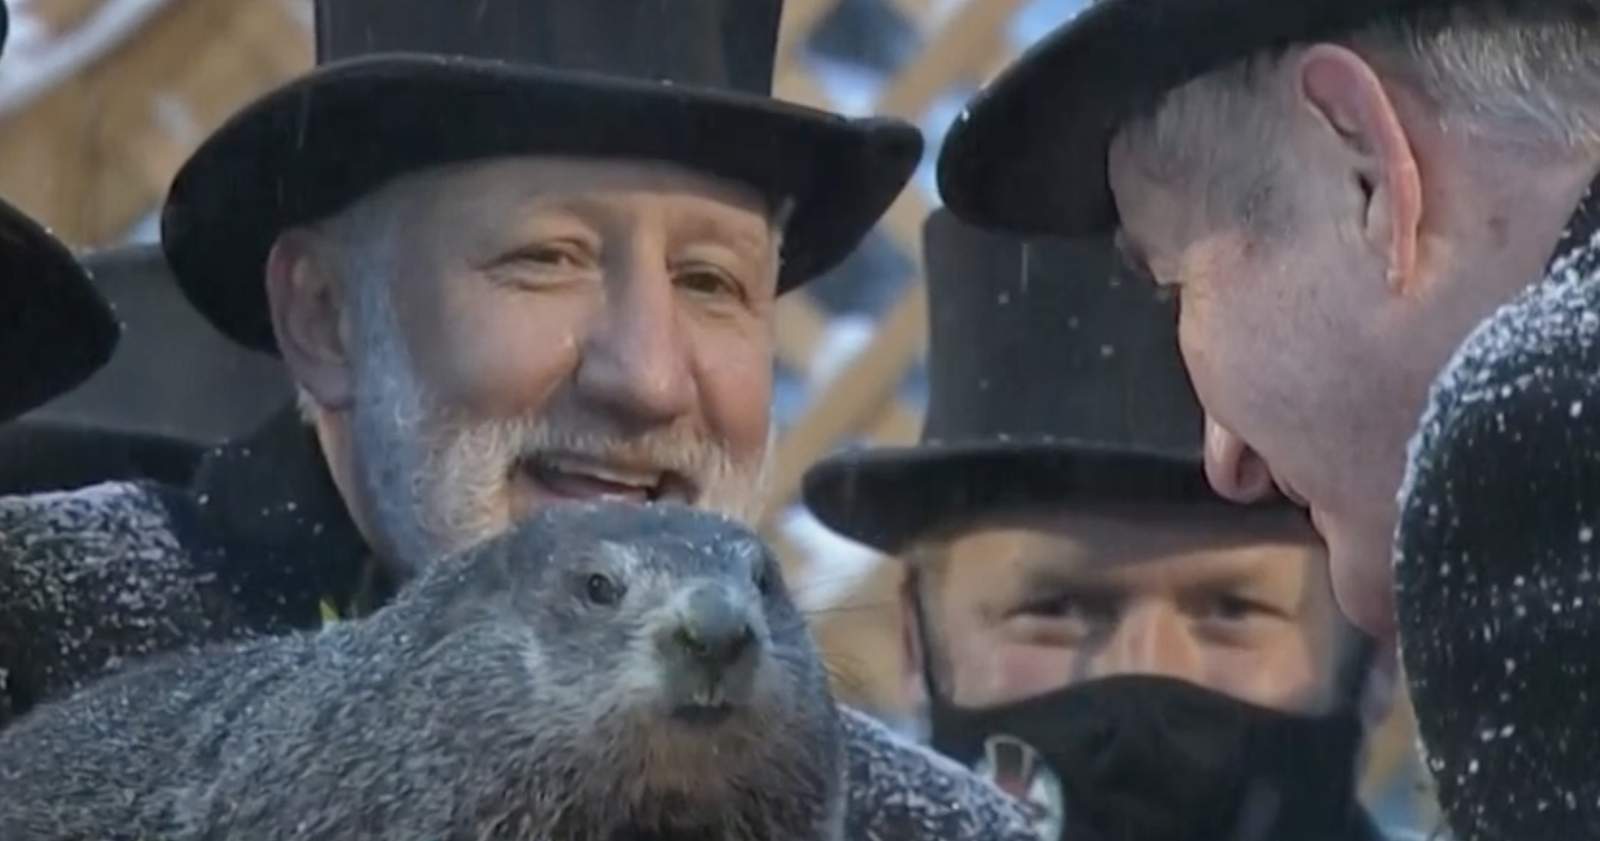 A gloomy Groundhog Day: Punxsutawney Phil says more winter